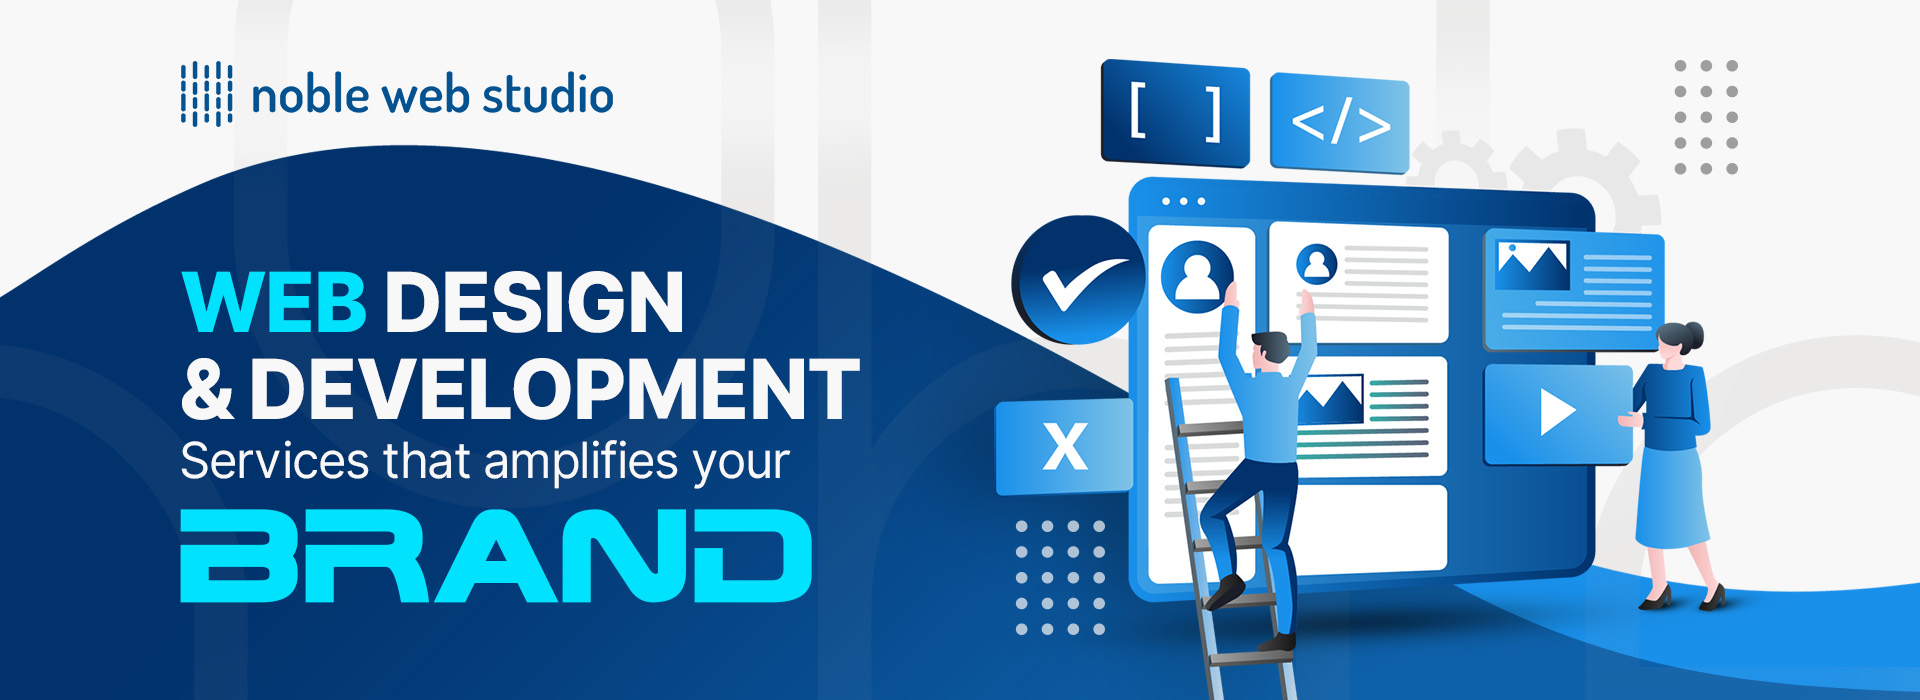 Web Design & Development Services that amplifies your Brand